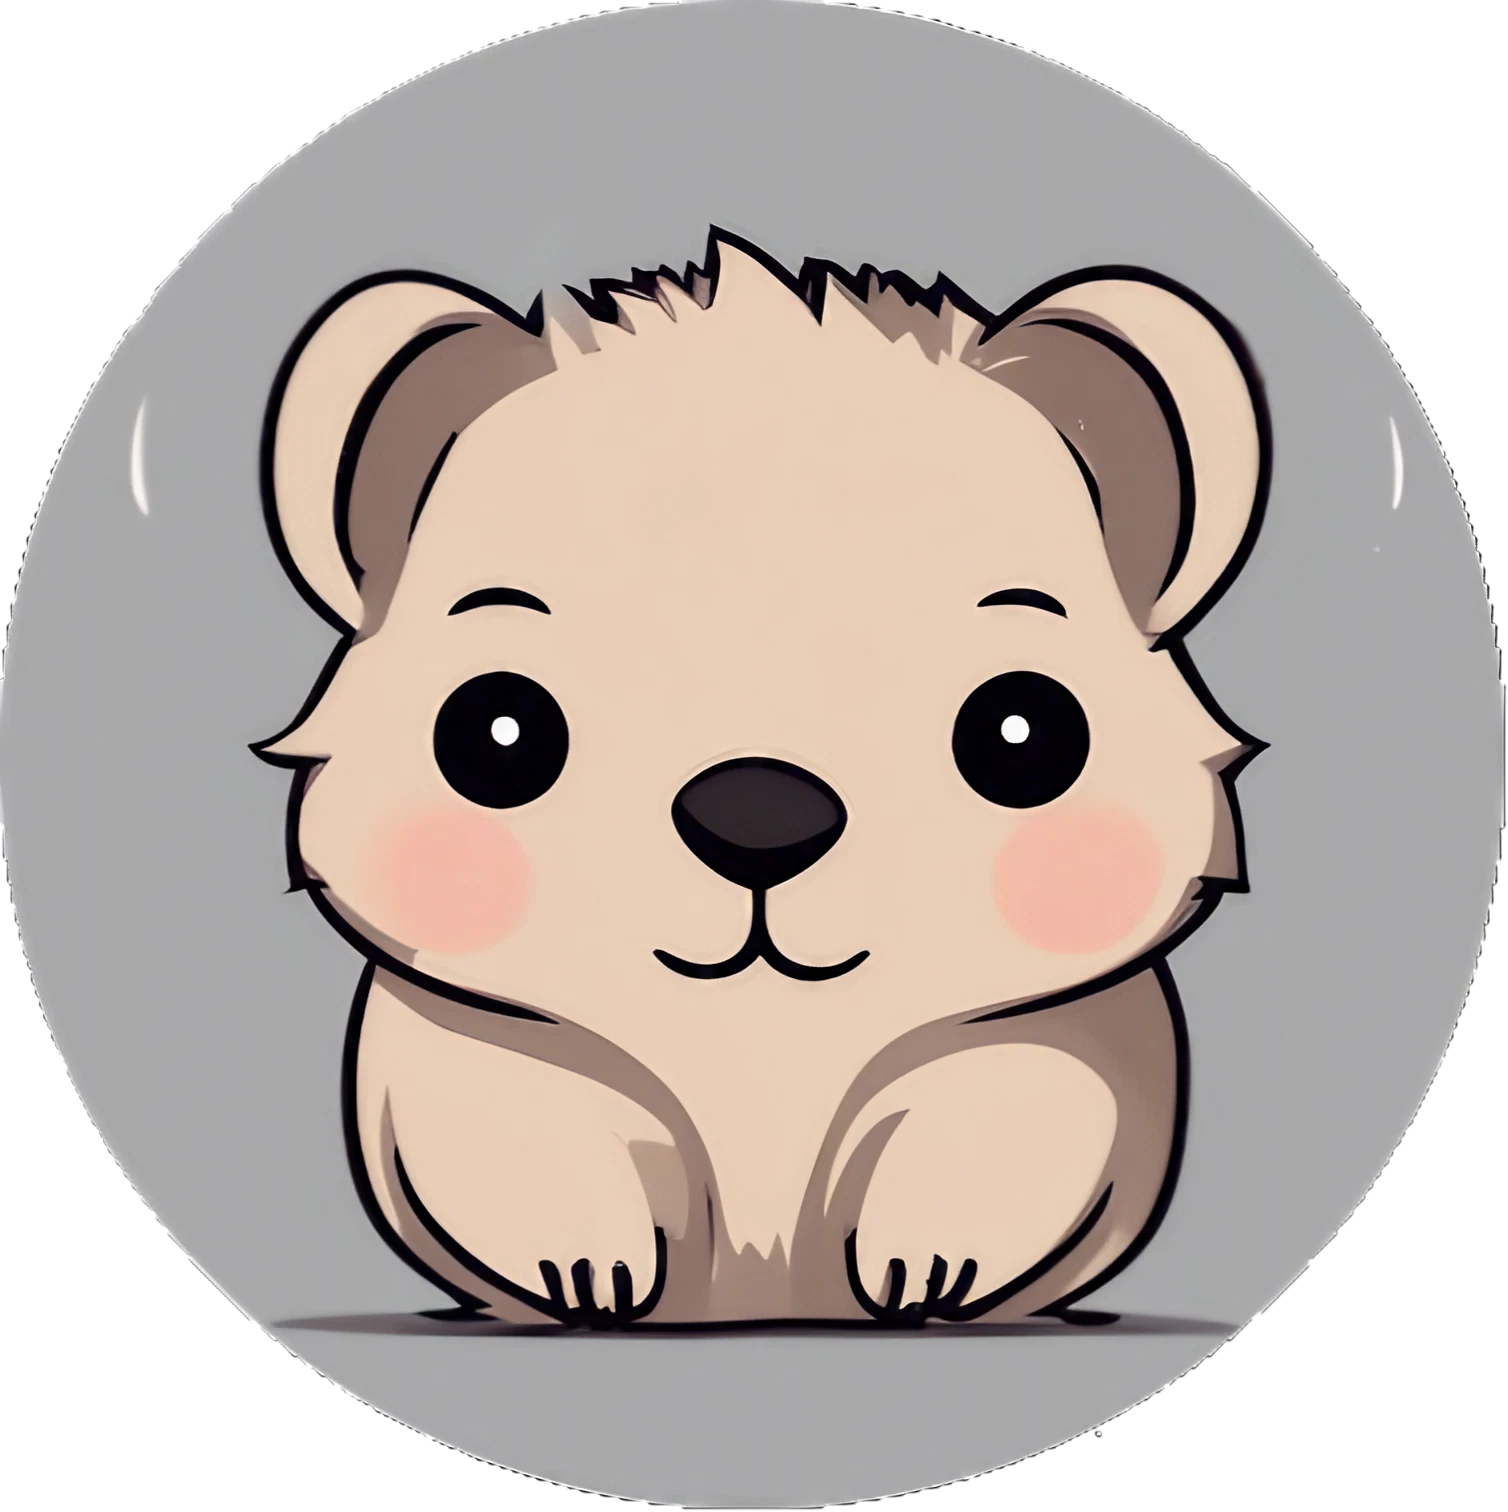 Happy Cute Kawaii Wombat - Sticker - 3x3cm groß